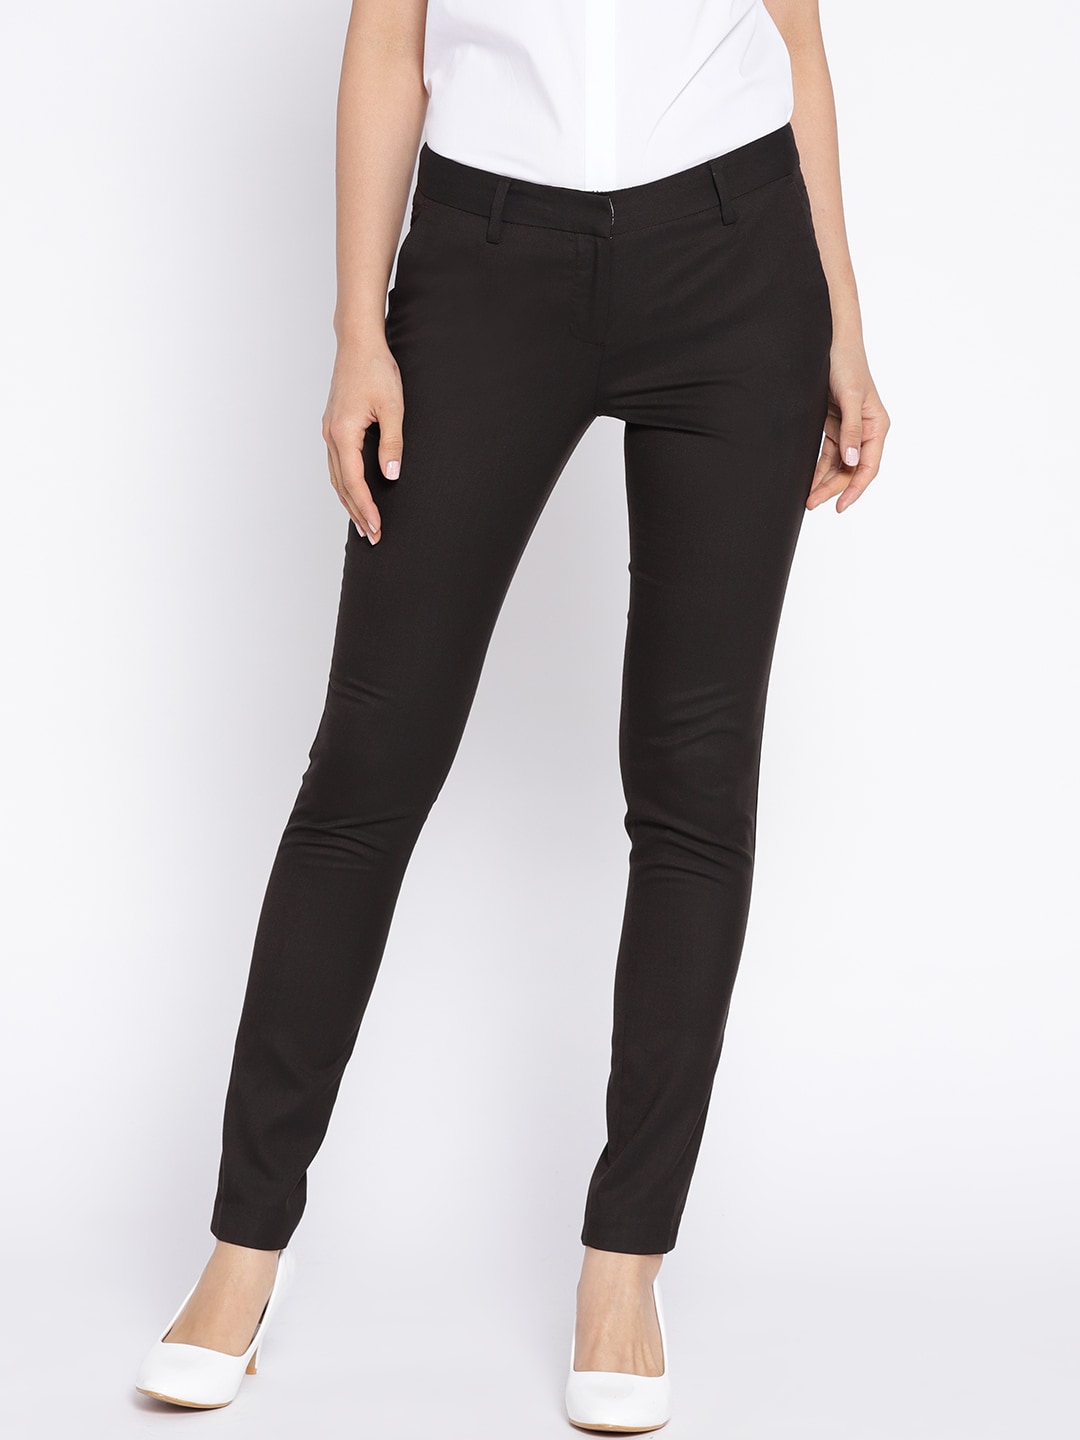 Buy Wills Lifestyle Women Black Skinny Fit Striped Semiformal Trousers   Trousers for Women 2013613  Myntra